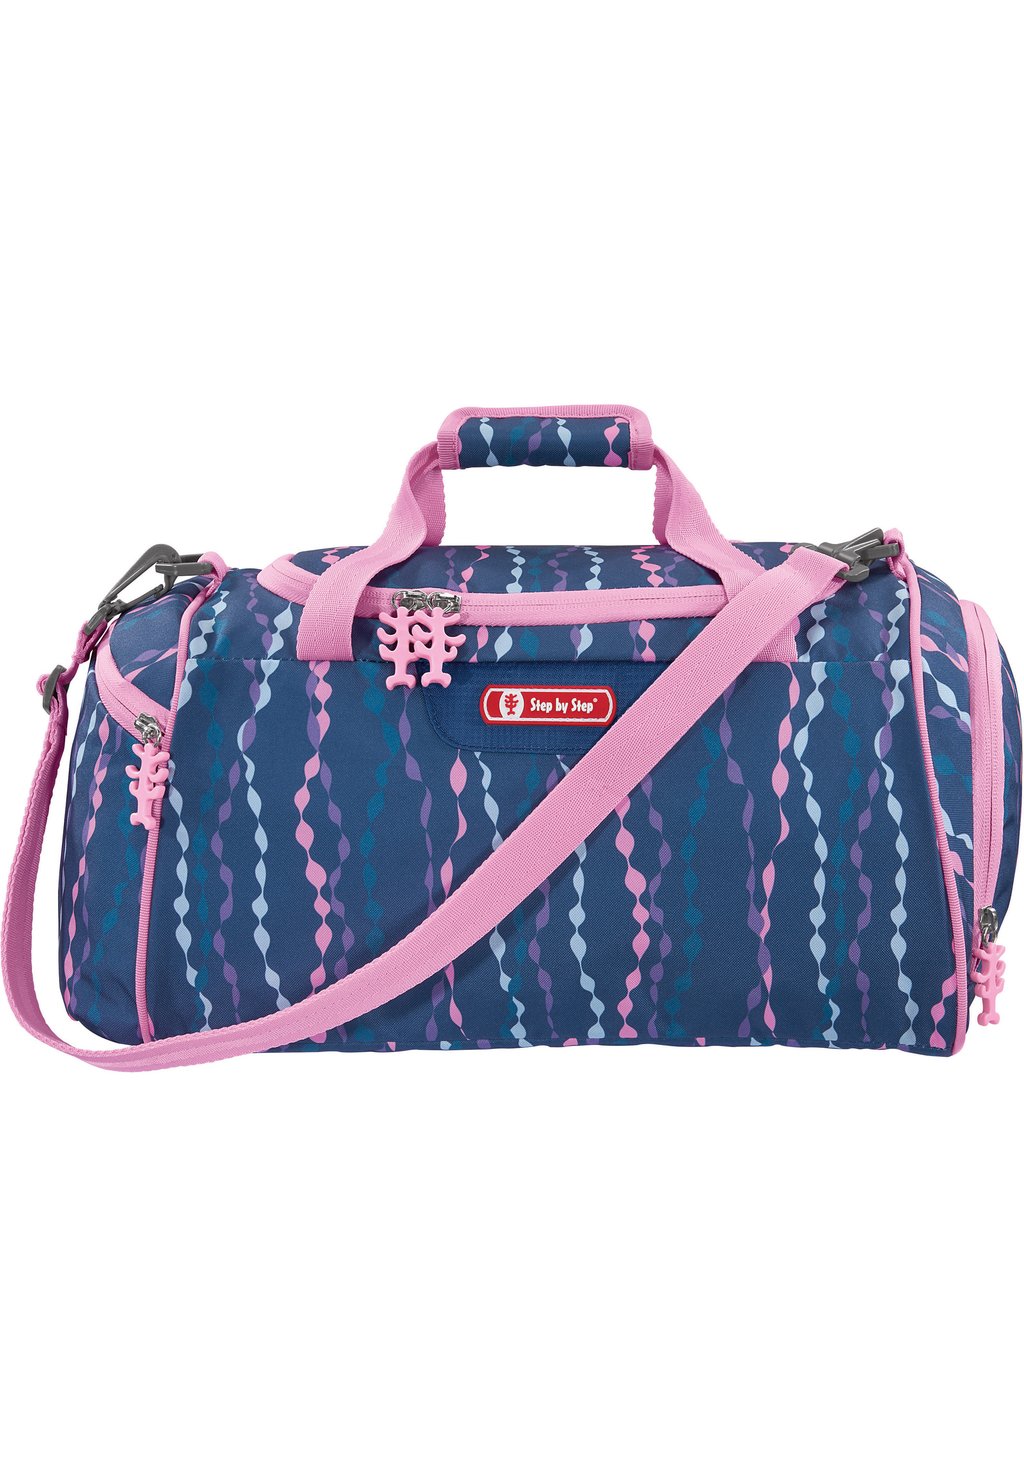 Спортивная сумка UNISEX Step by Step, цвет mermaid спортивная сумка unisex step by step цвет maja